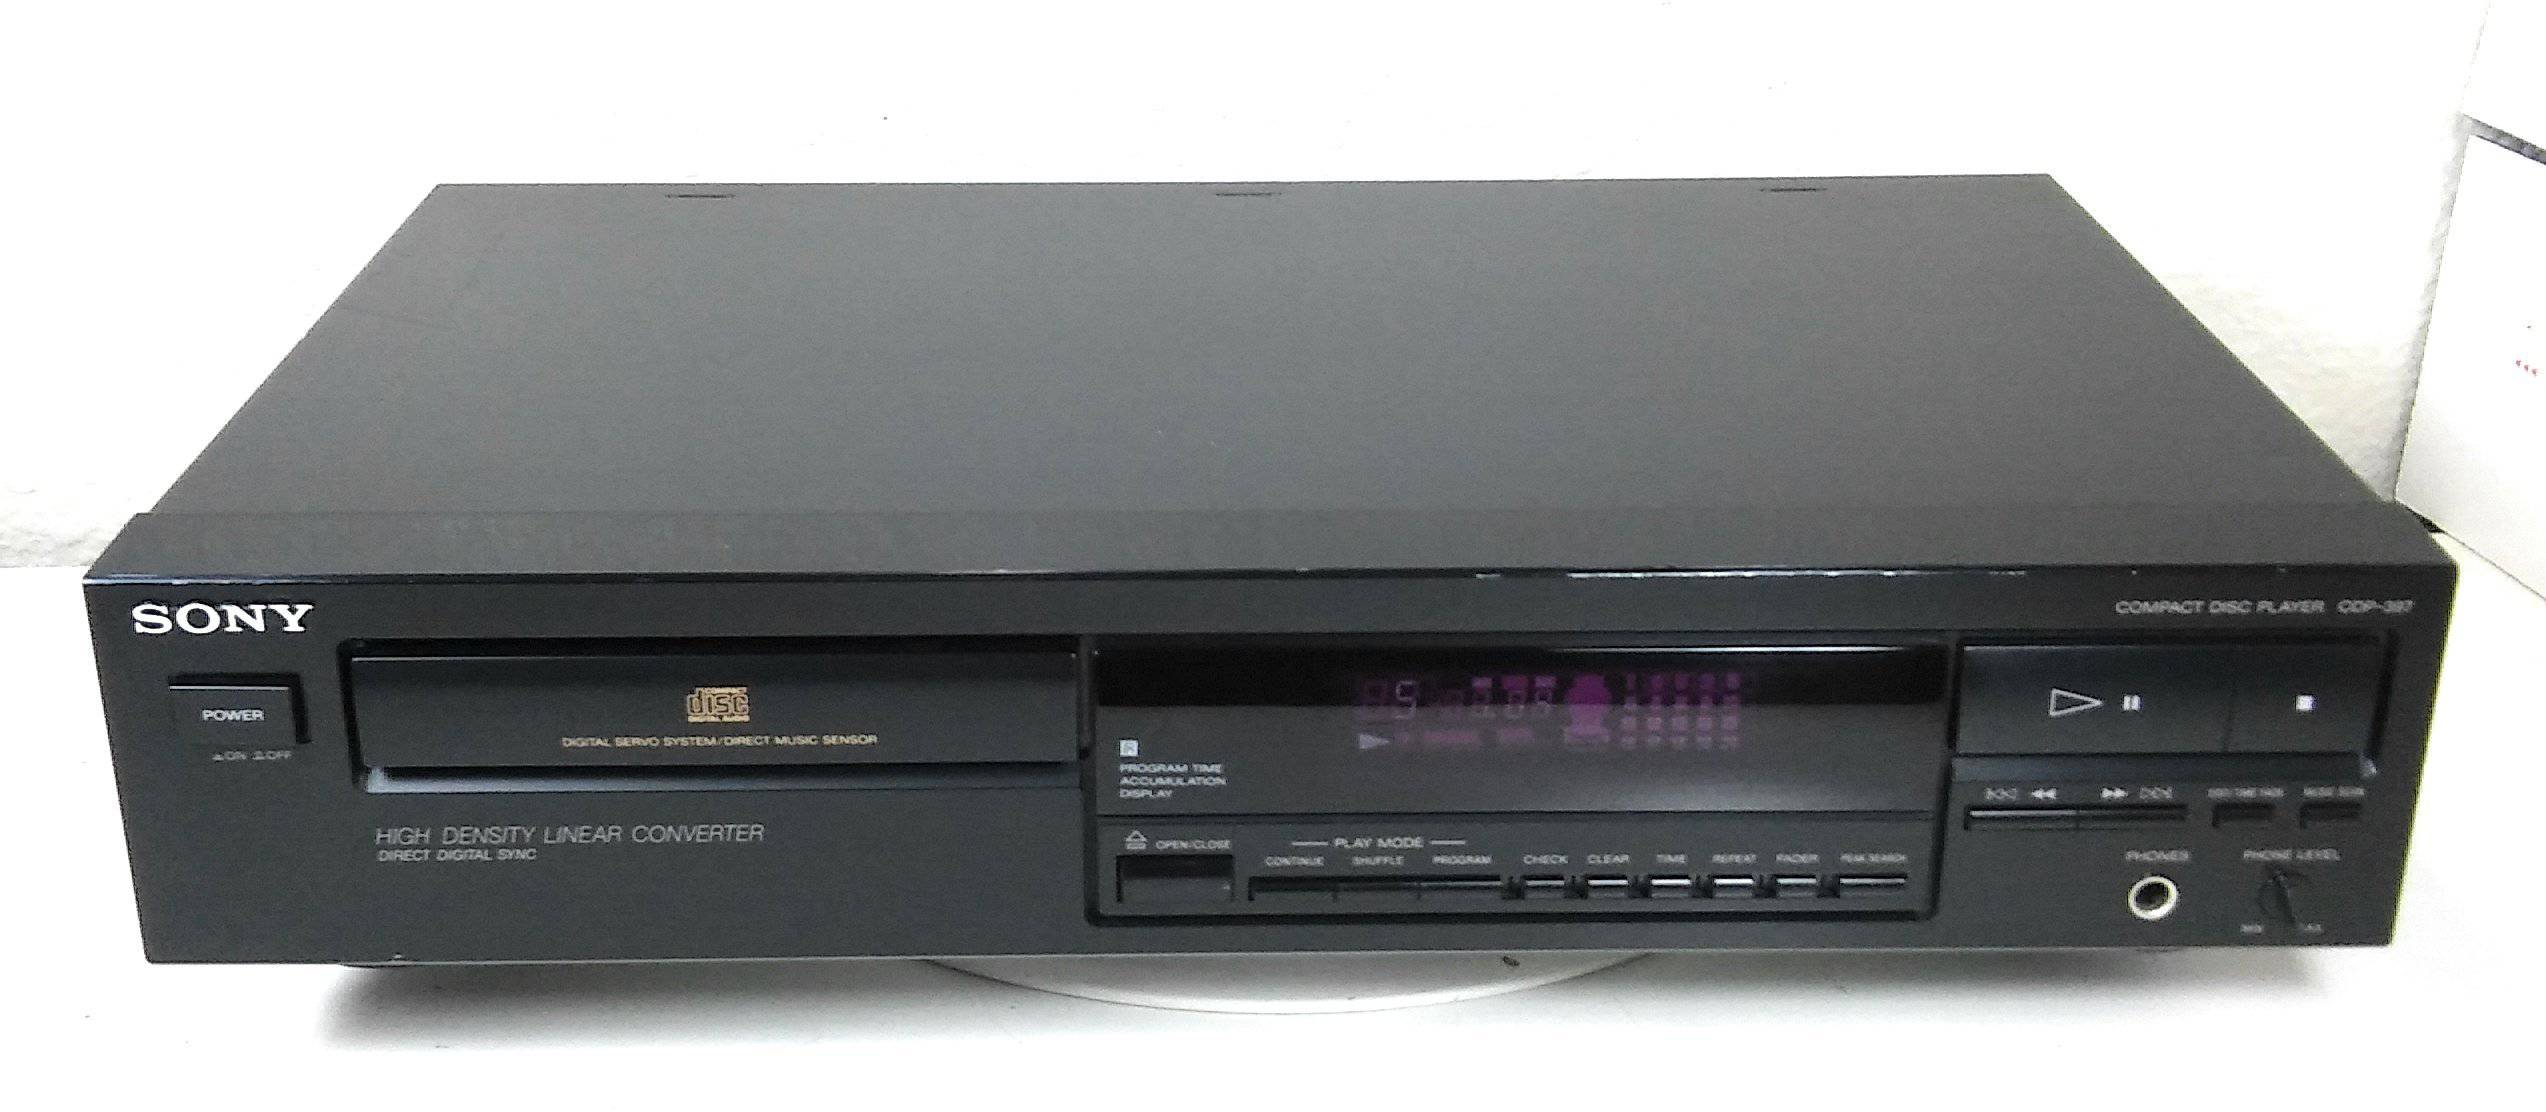 Sony CDP-397